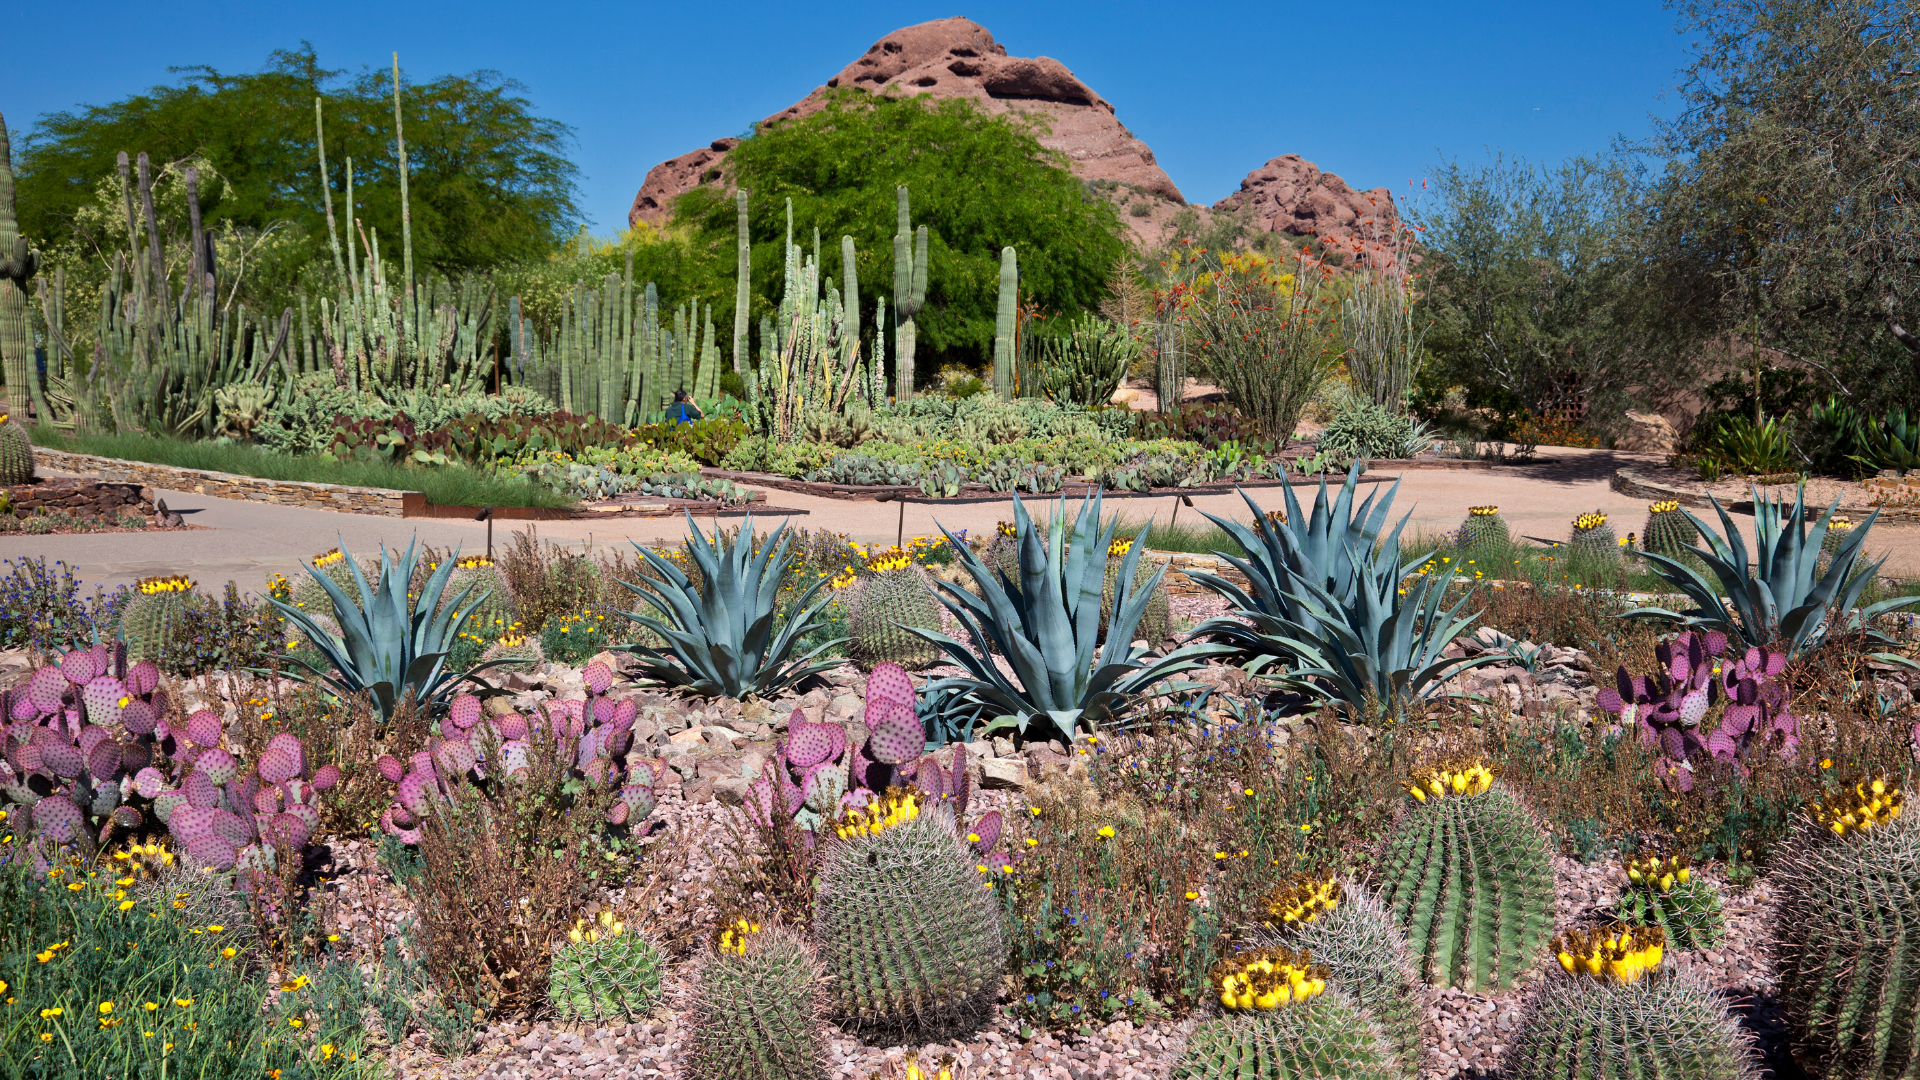 The Desert Botanical Garden is one of the best botanical gardens in the US